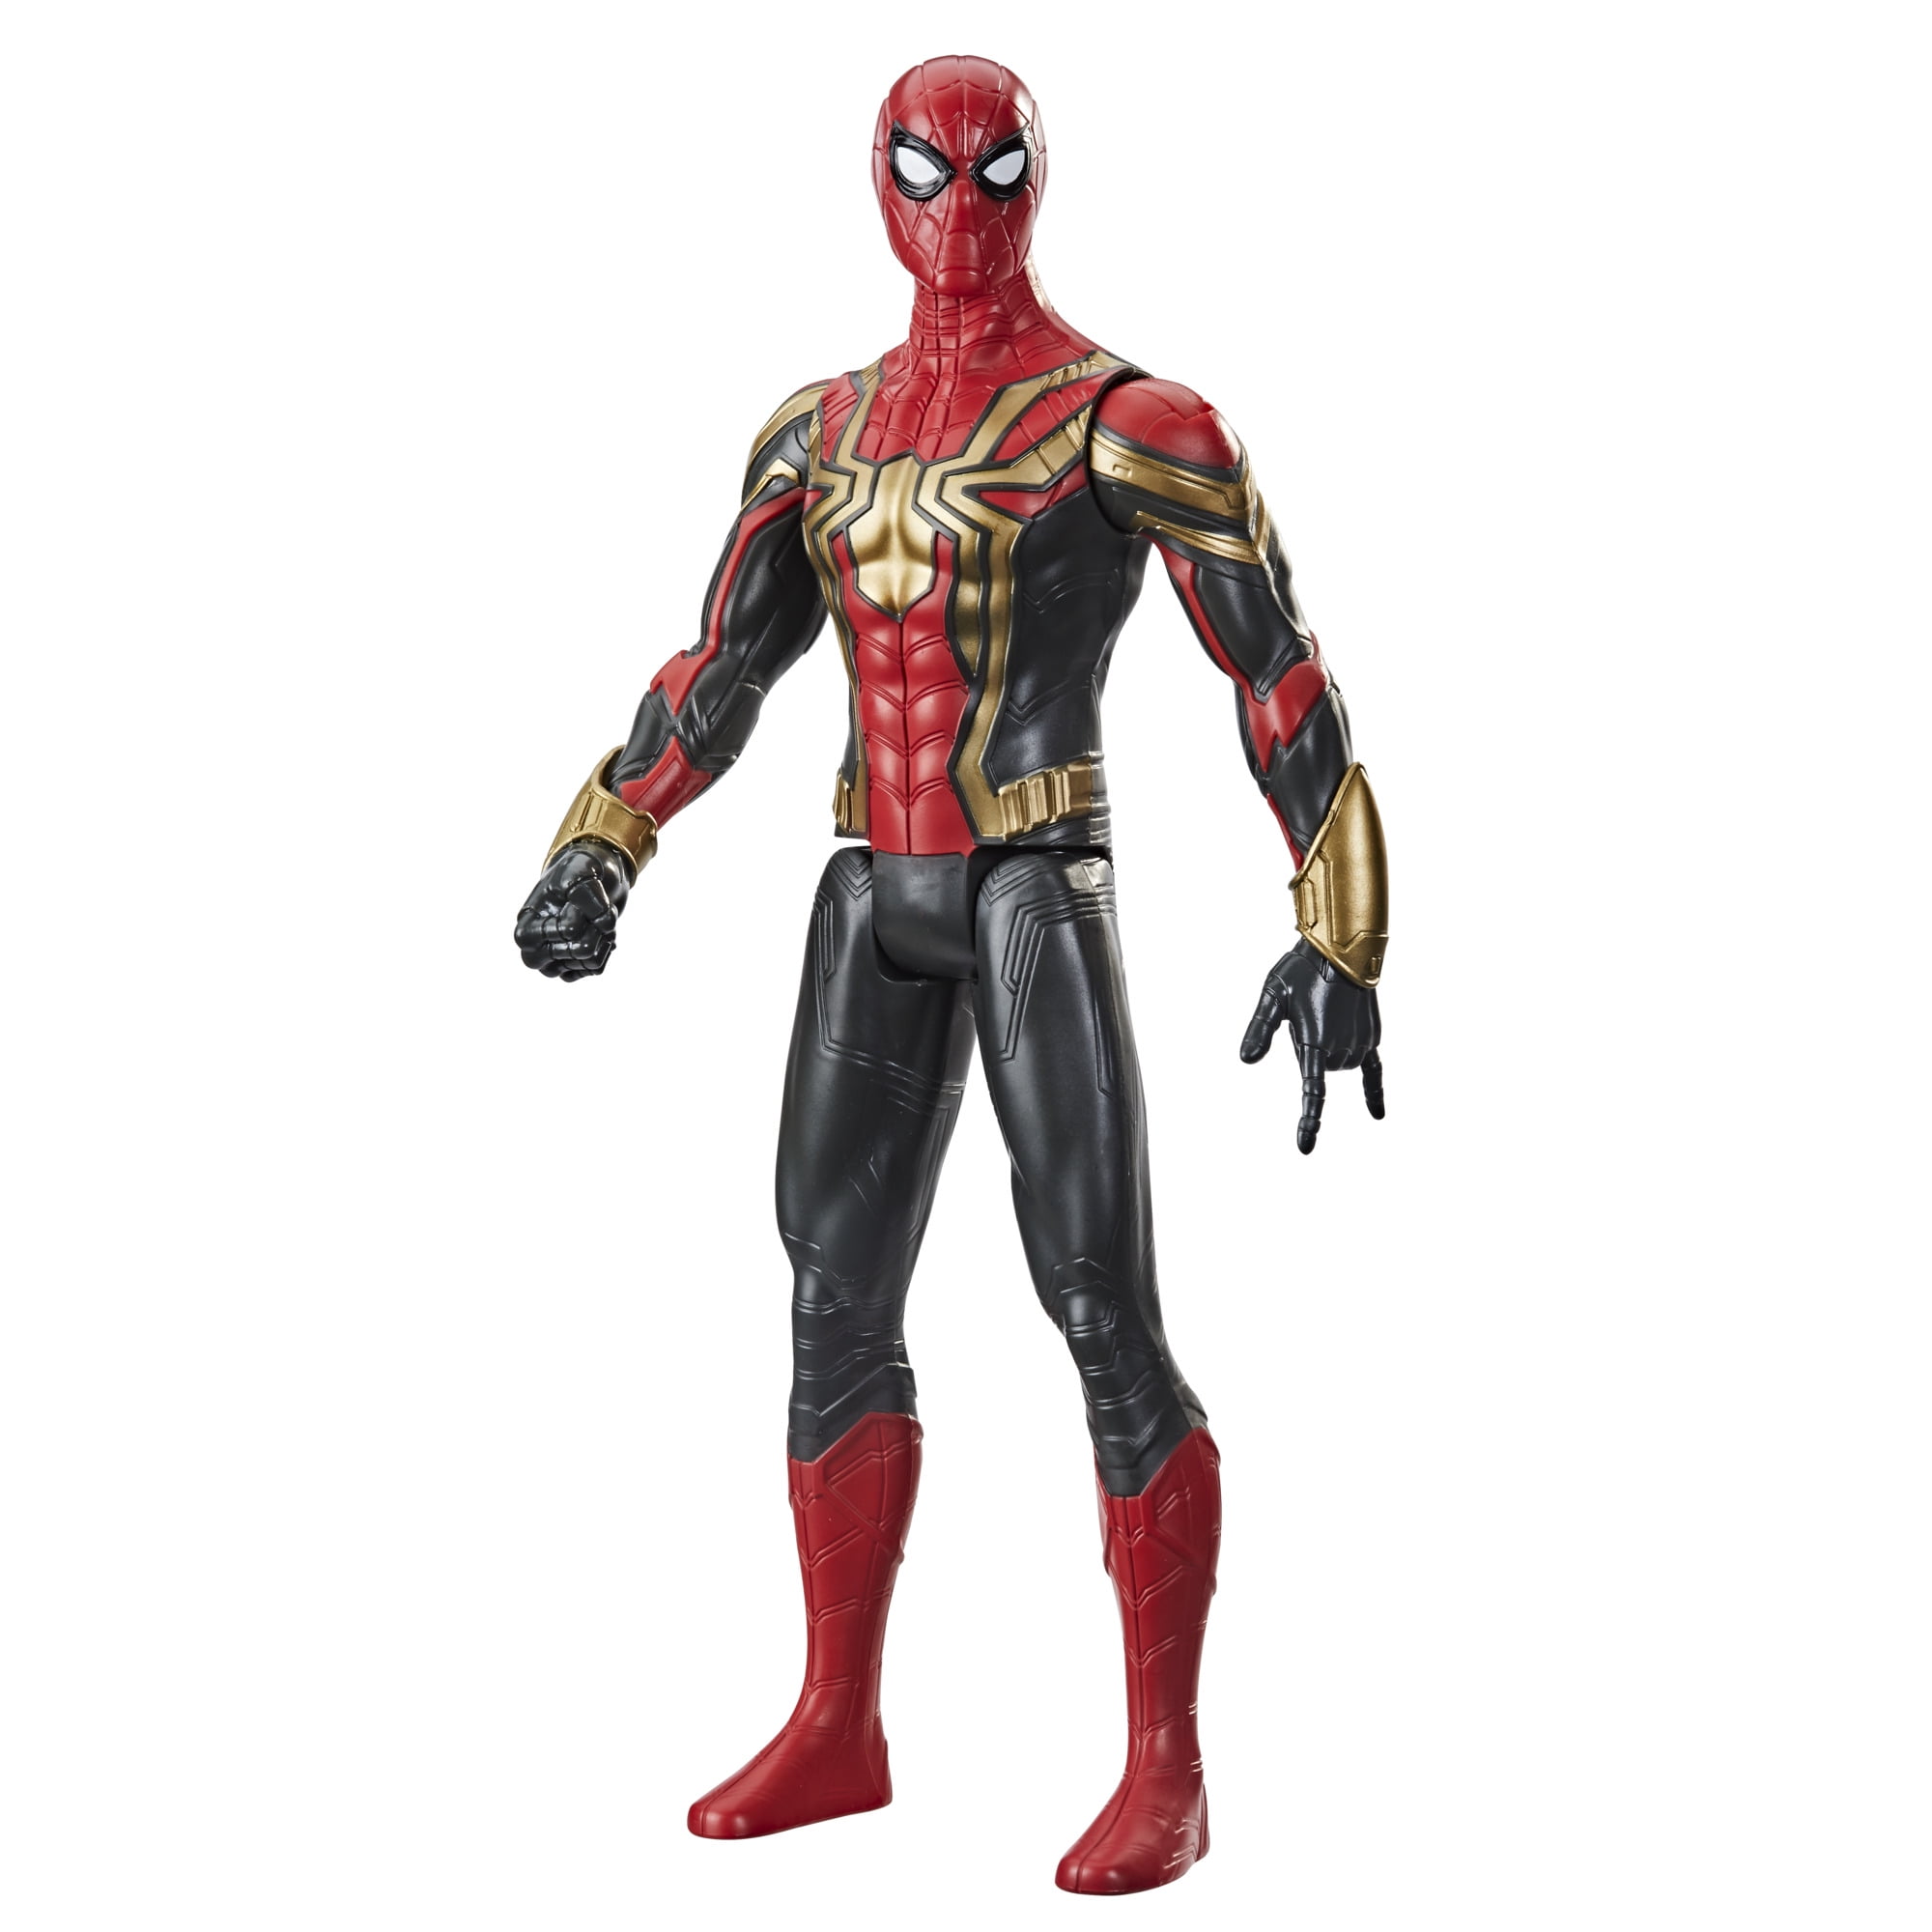 Marvel Avengers Iron Spider Action Figure-Titan Hero Series 